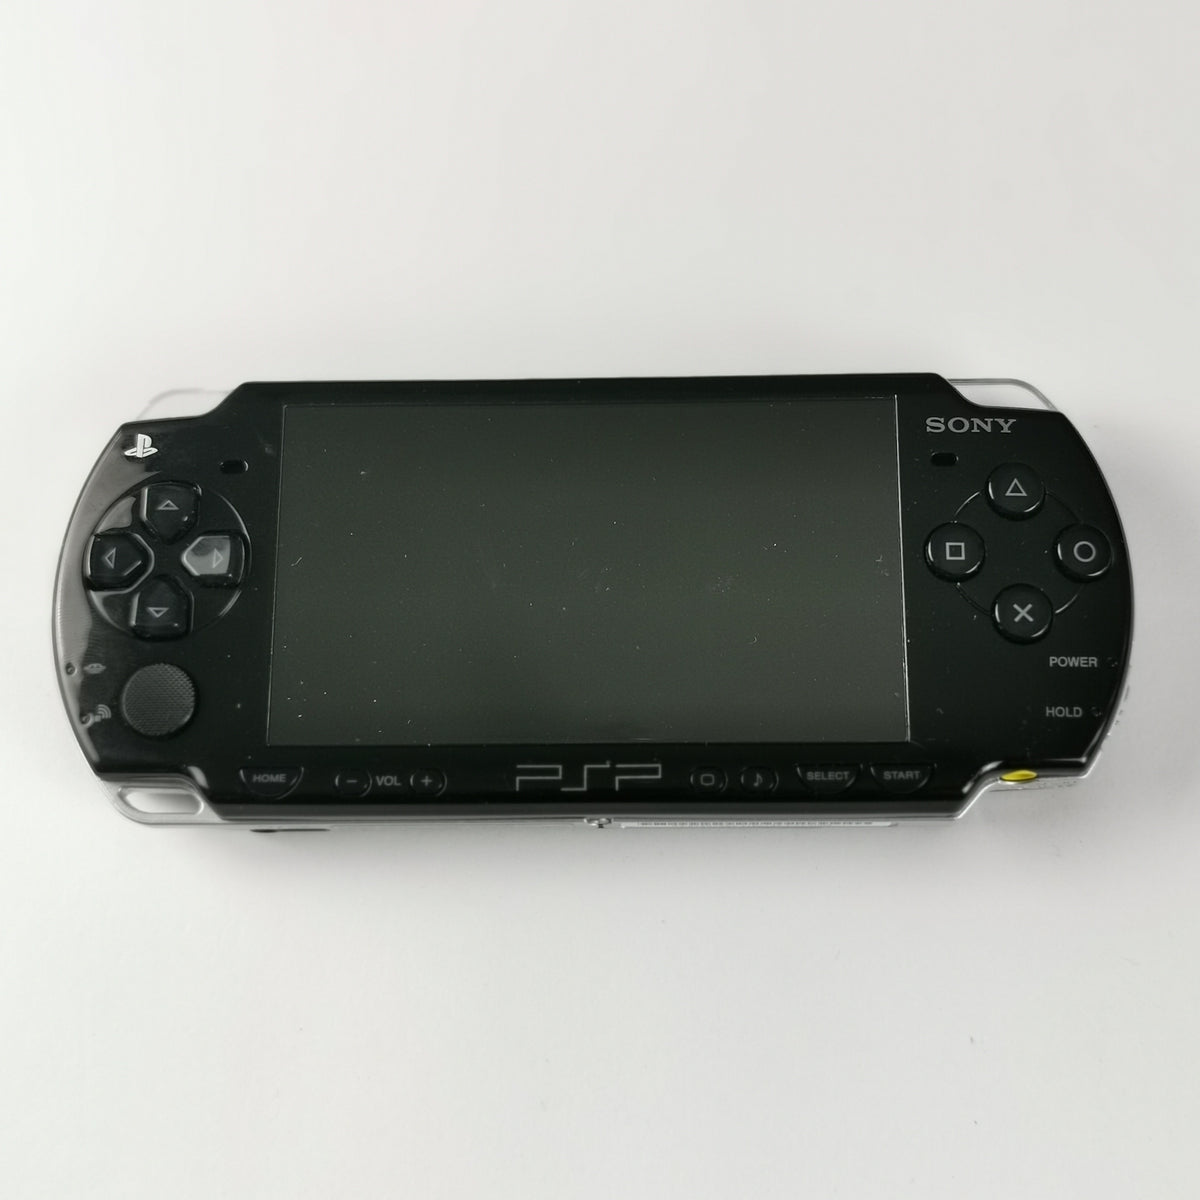 Playstation Portable 2004 schwarz [PSP]